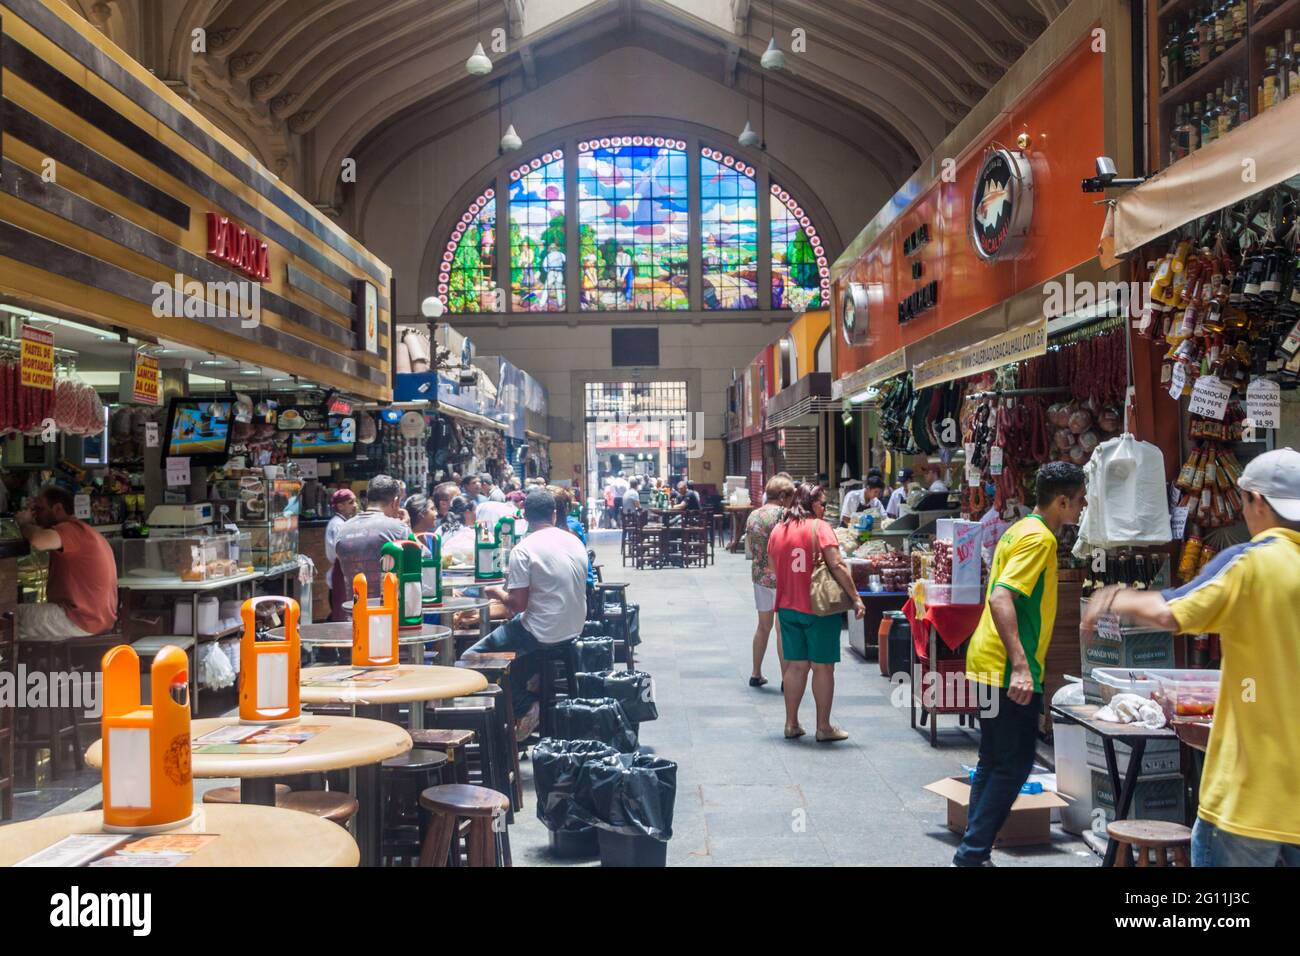 SAN PAOLO, BRASILE - 3 FEBBRAIO 2015: Vista del mercato comunale di Mercado a San Paolo, Brasile Foto Stock